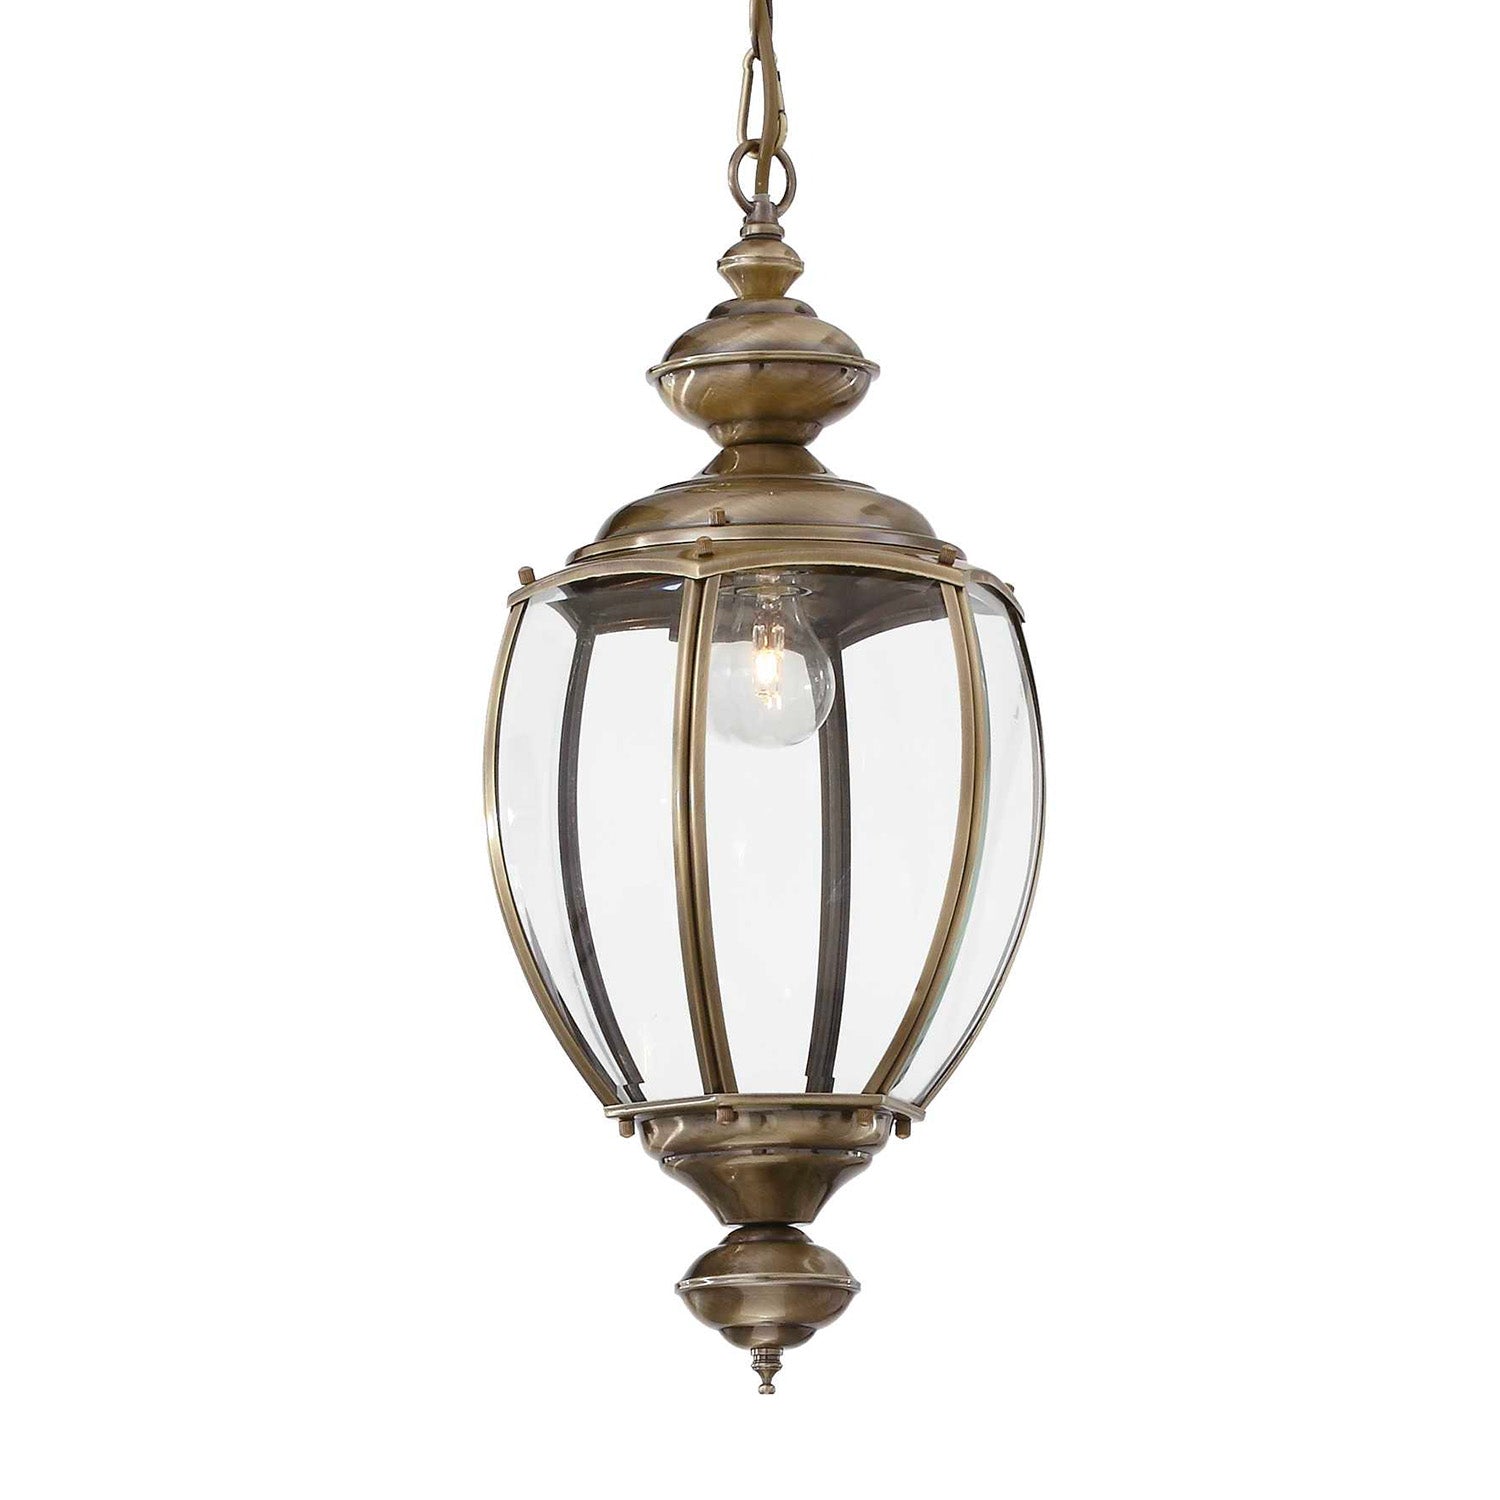 NORMA - Antique bronze or chrome chandelier